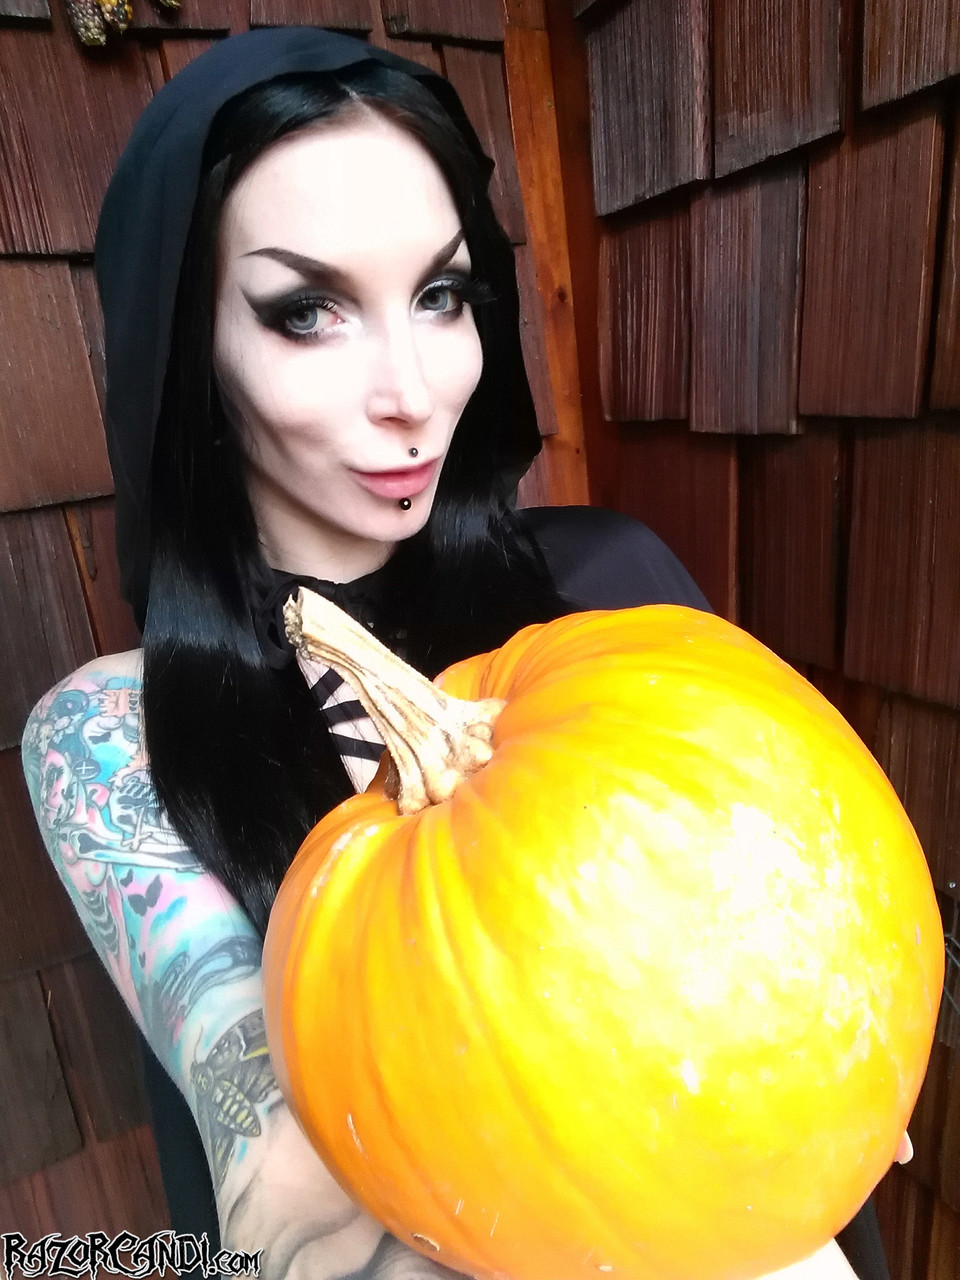 Goth girl Razor Candi flaunts her big ass over a pumpkin in Halloween attire porno fotoğrafı #427655339 | Razor Candi Pics, Razor Candi, MILF, mobil porno